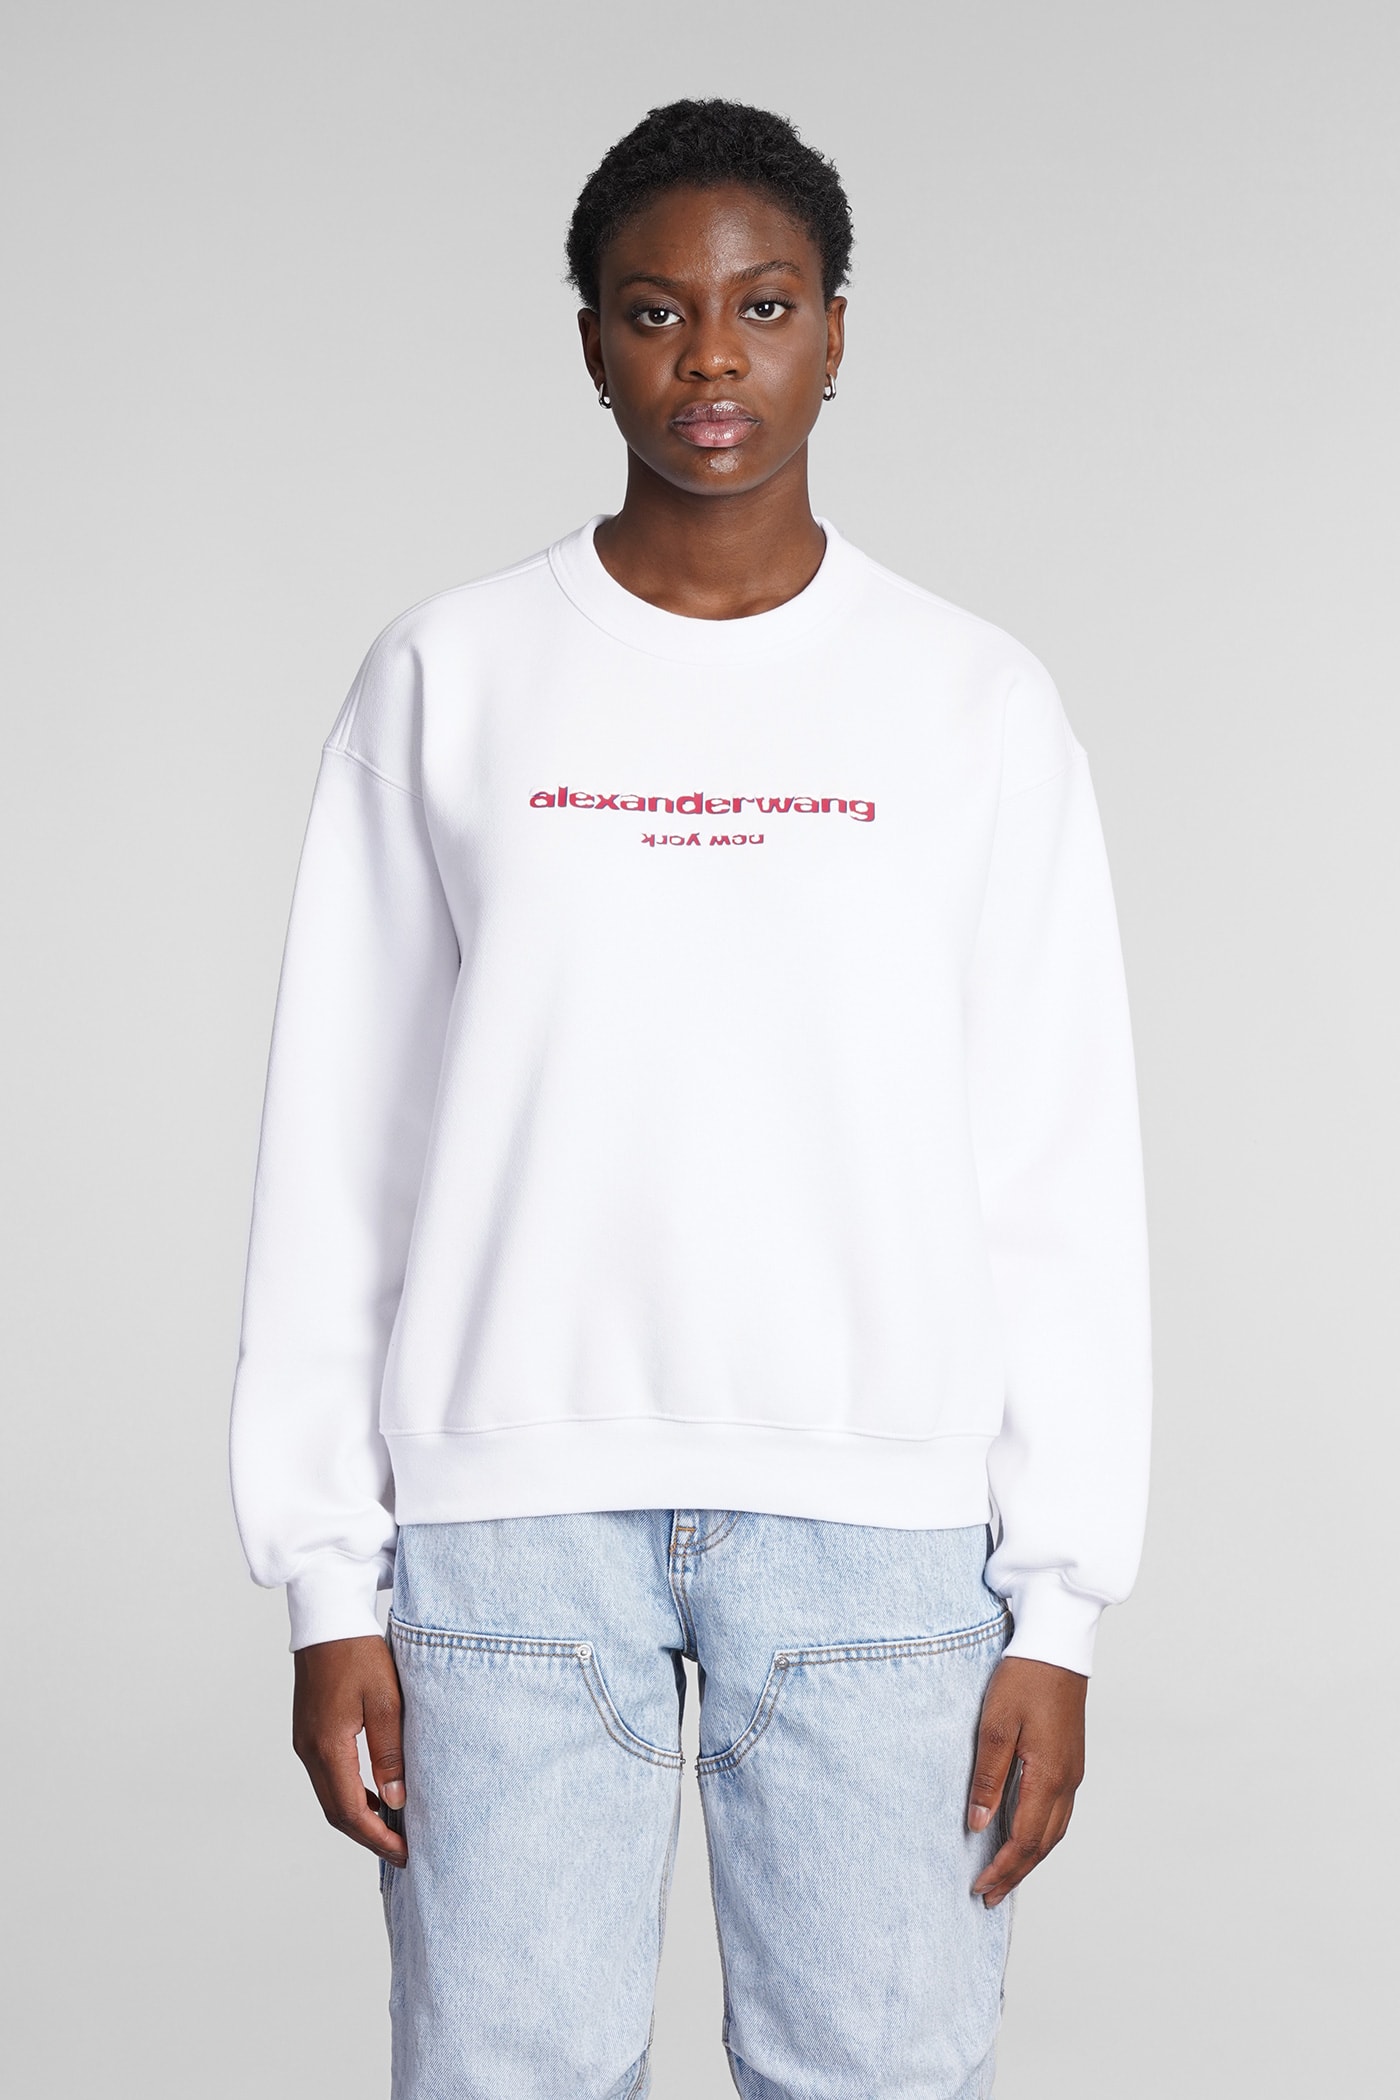 Alexander Wang Sweatshirt In White Cotton